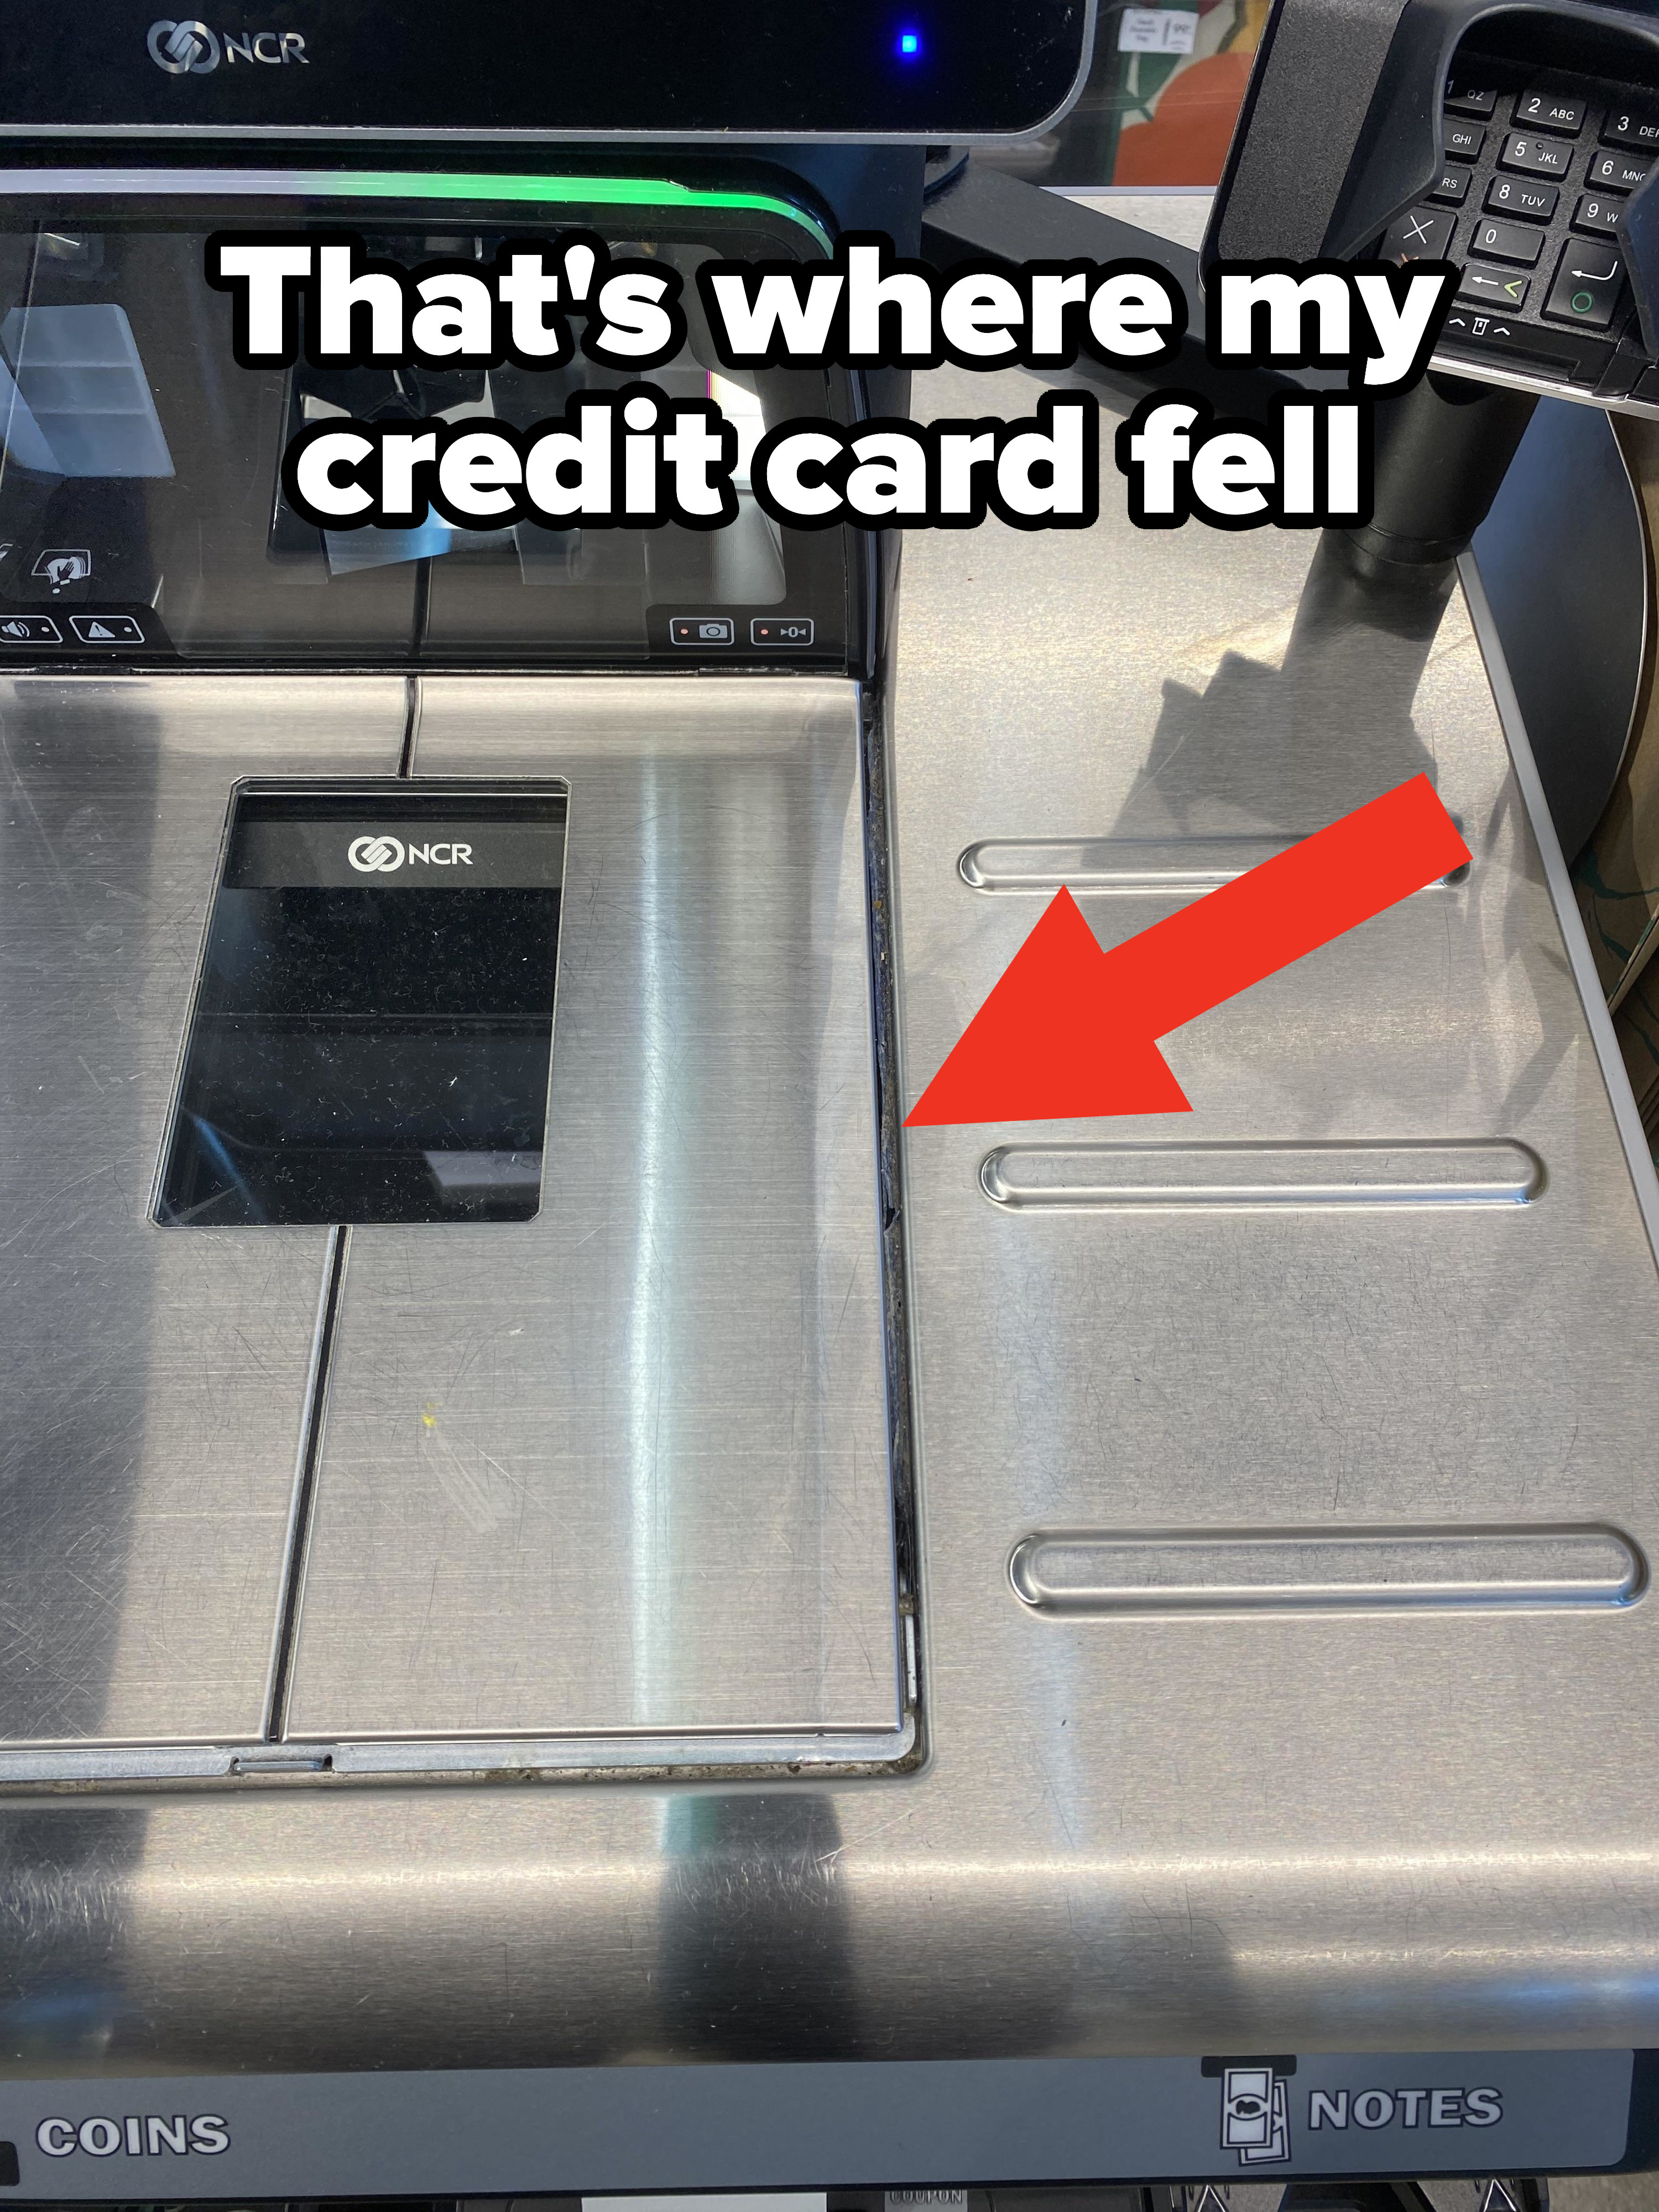 credit card that fell down a self-checkout machine